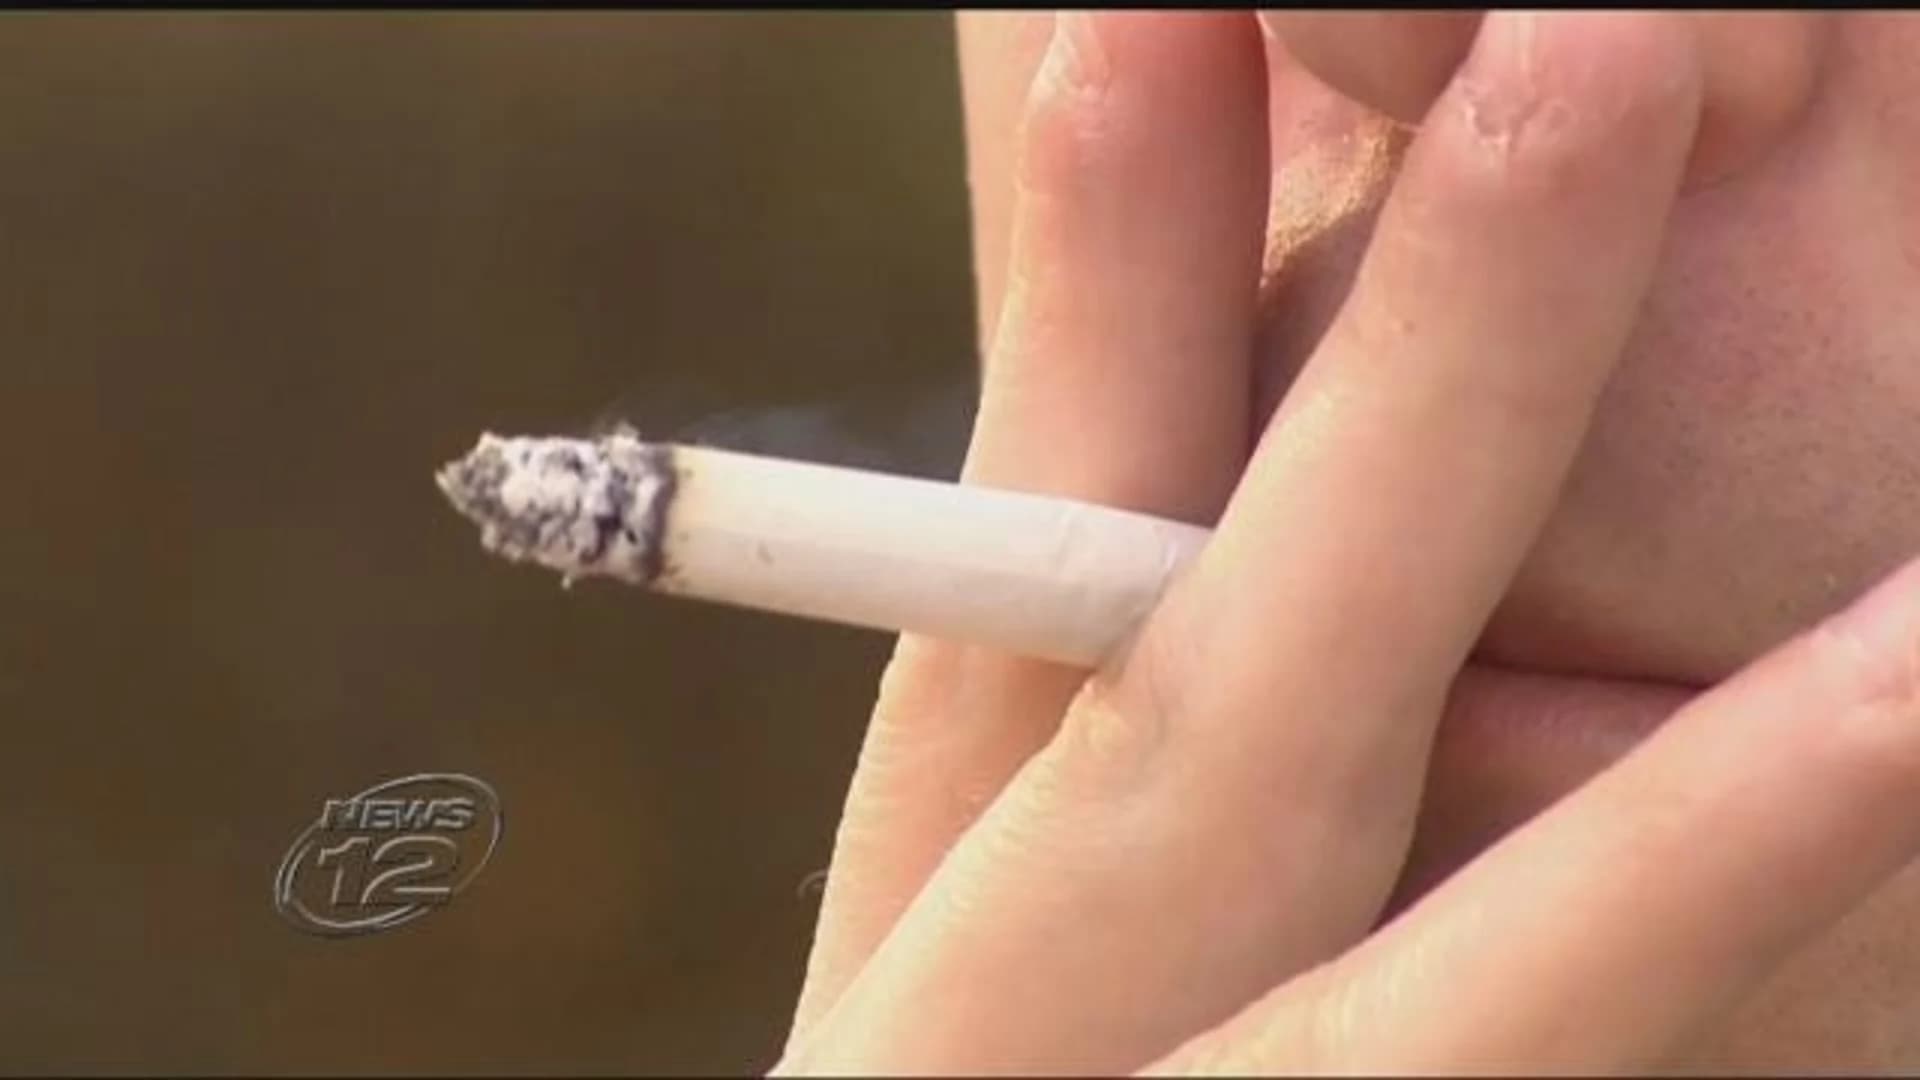 Rockland man aims to ban smoking inside adult care facilities